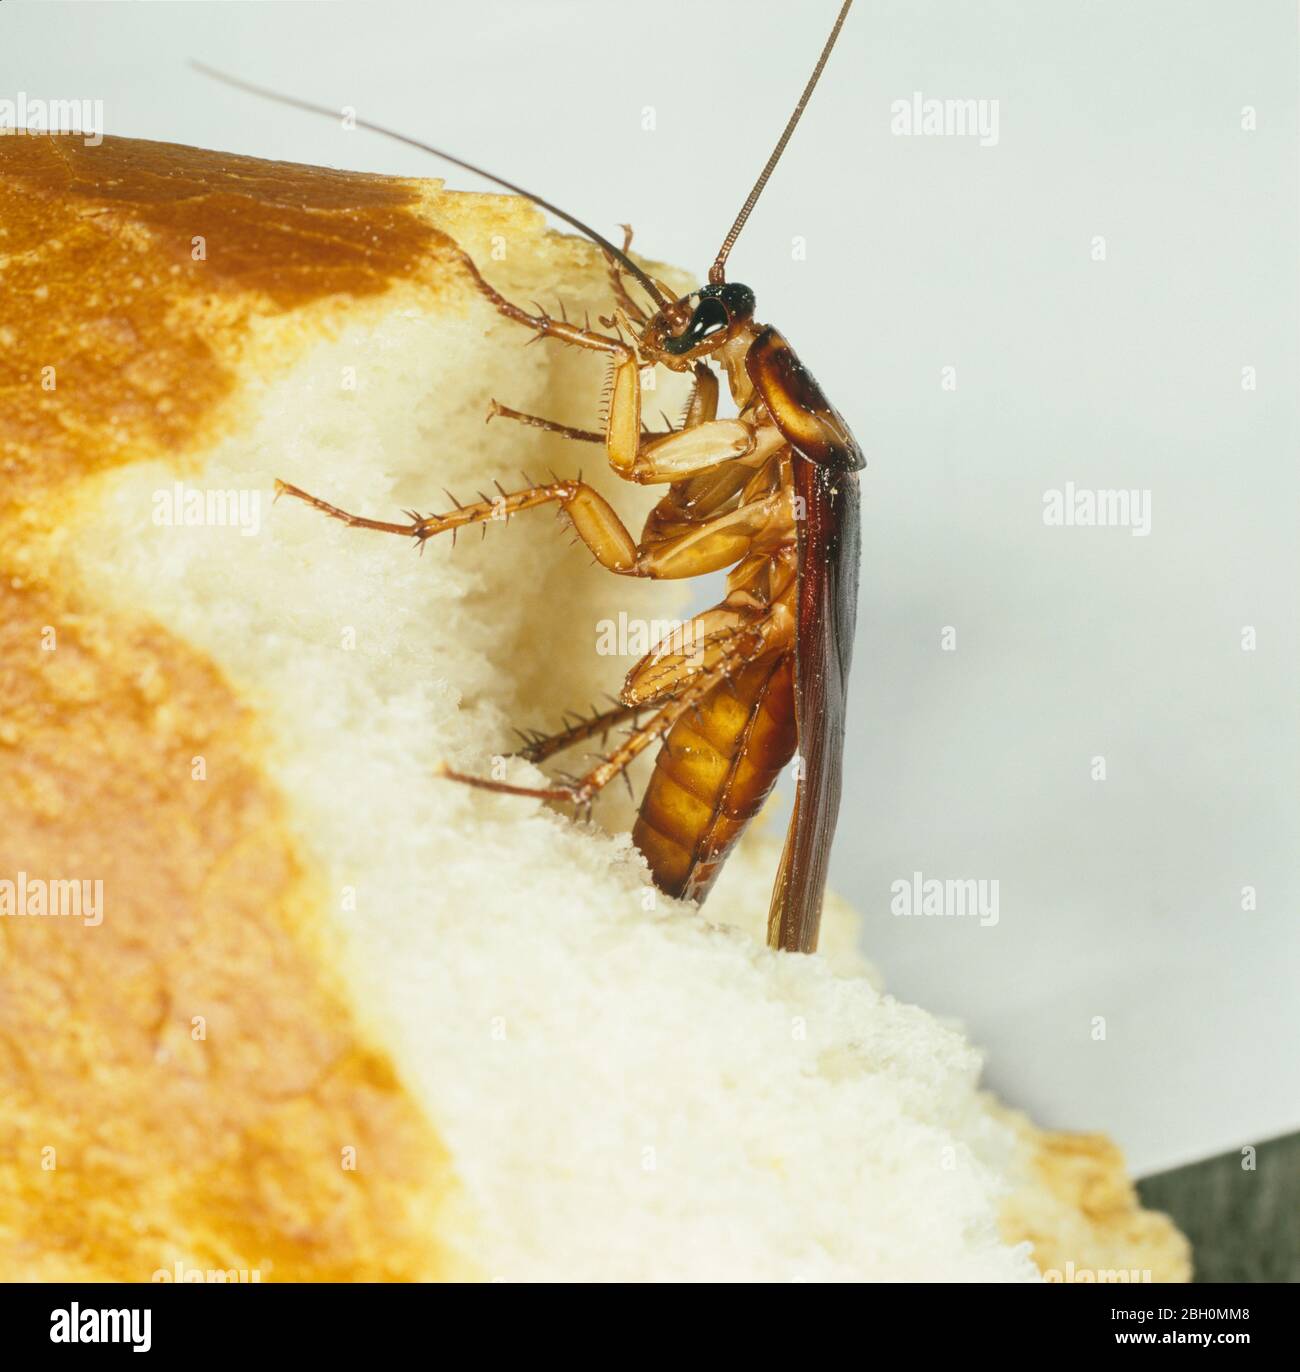 American cockroach (Periplaneta americana) adult of public health household pest on bread Stock Photo